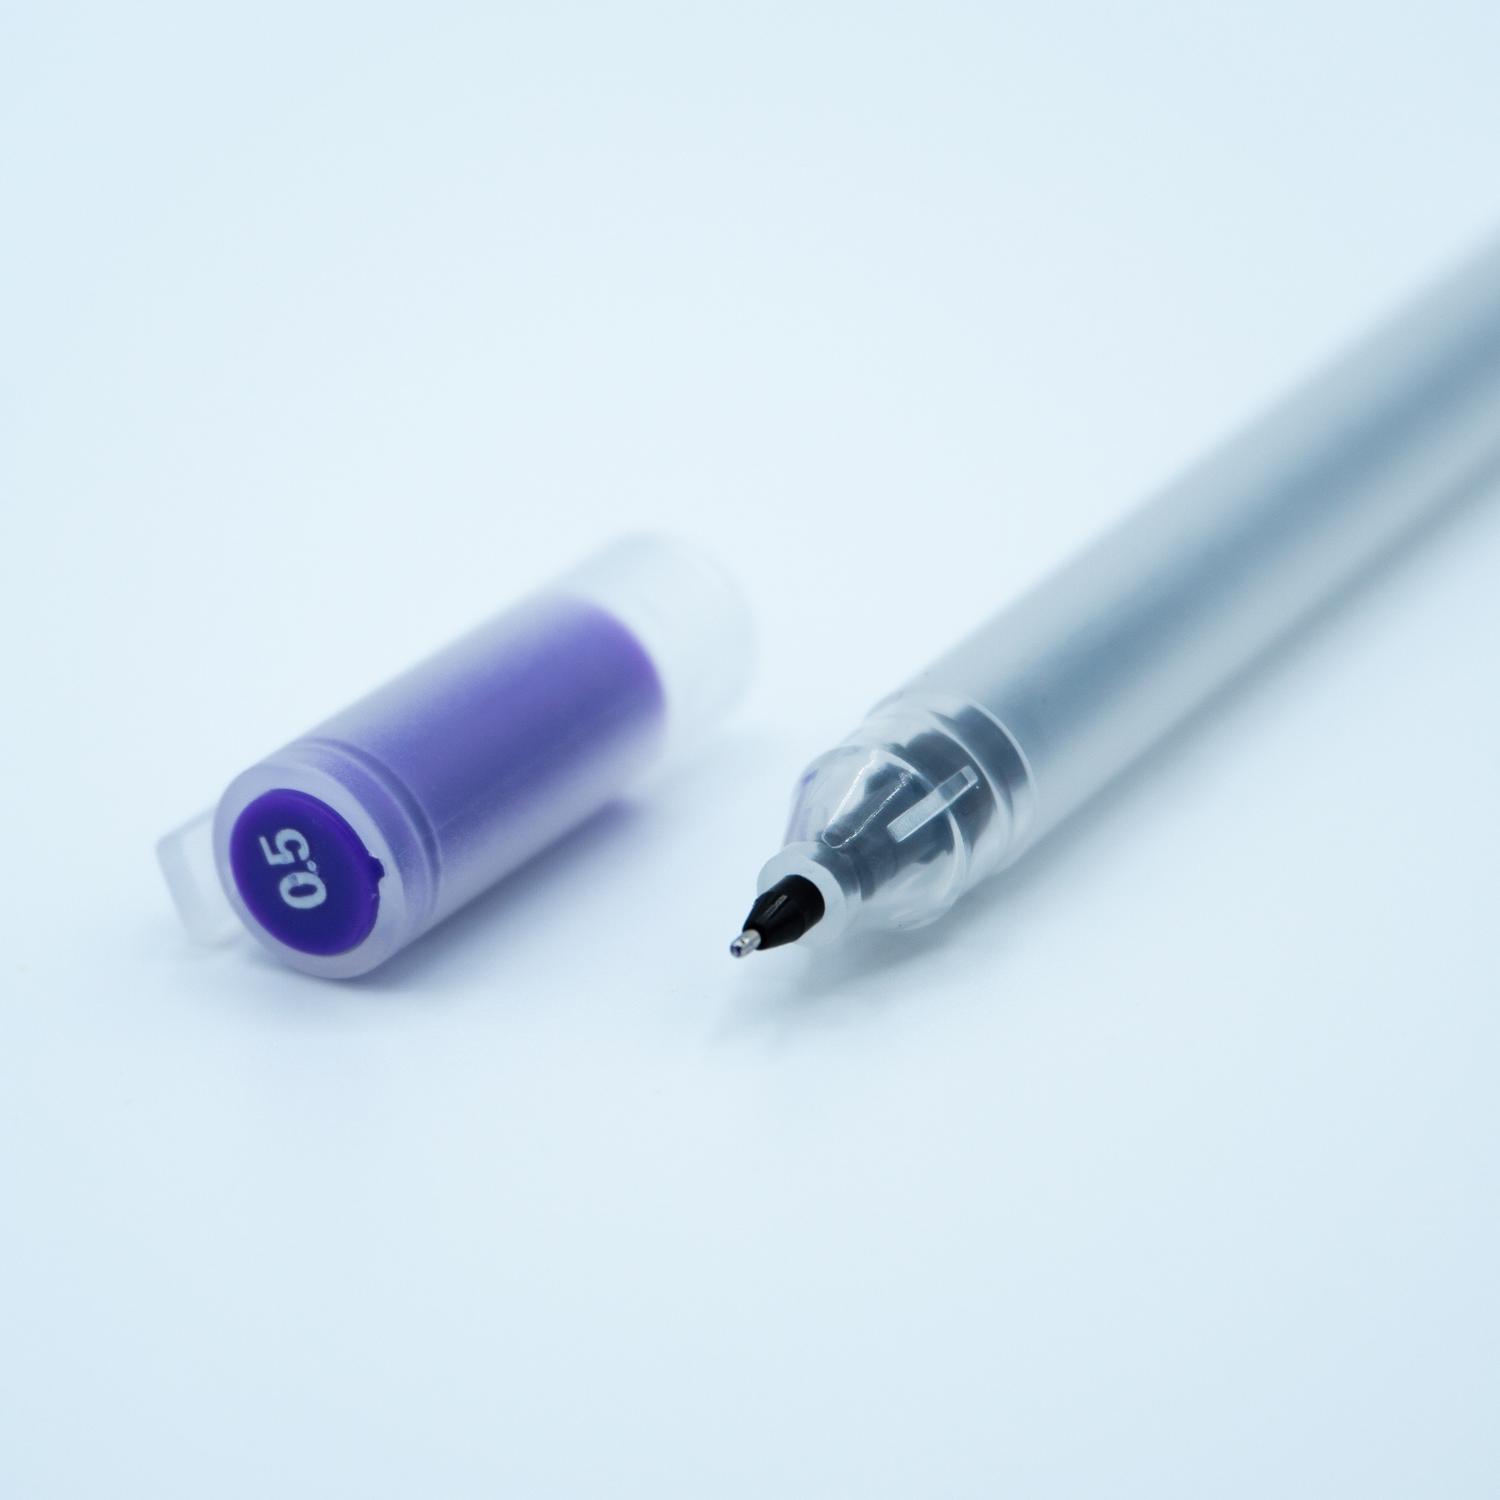 MUJI Pen, MUJI Gel Pens, 10 Pack, 0.5mm/0.38mm, Muji planner pens, Black  Blue / Black